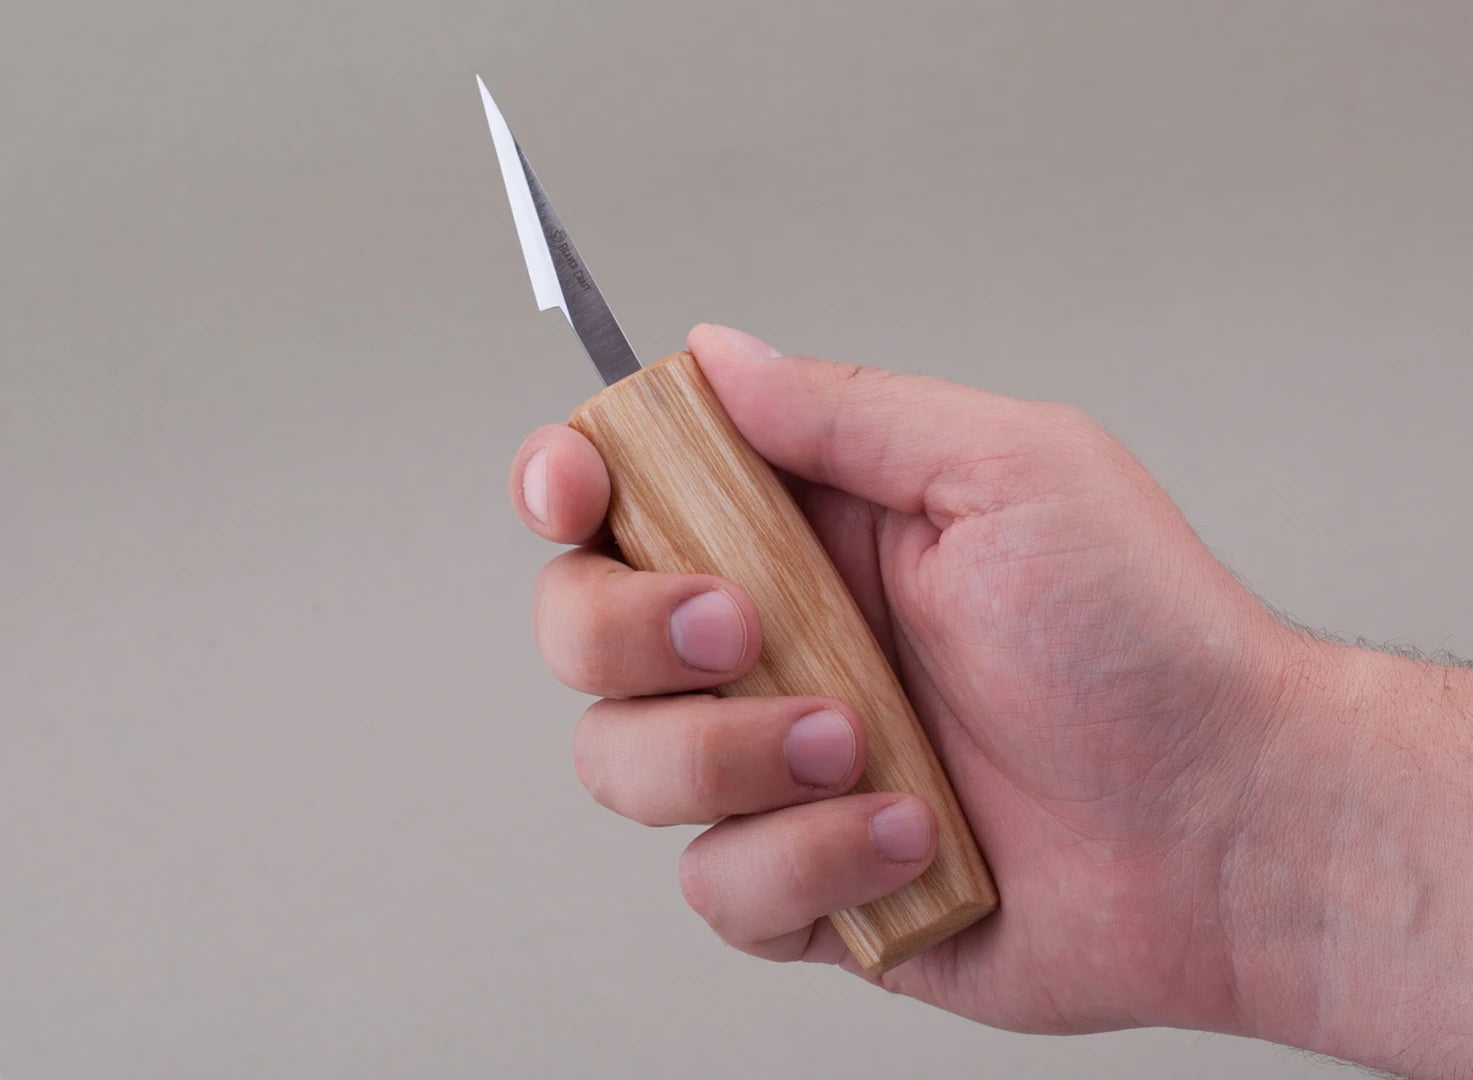 Small wood carving knife items for sale online - BeaverCraft – BeaverCraft  Tools